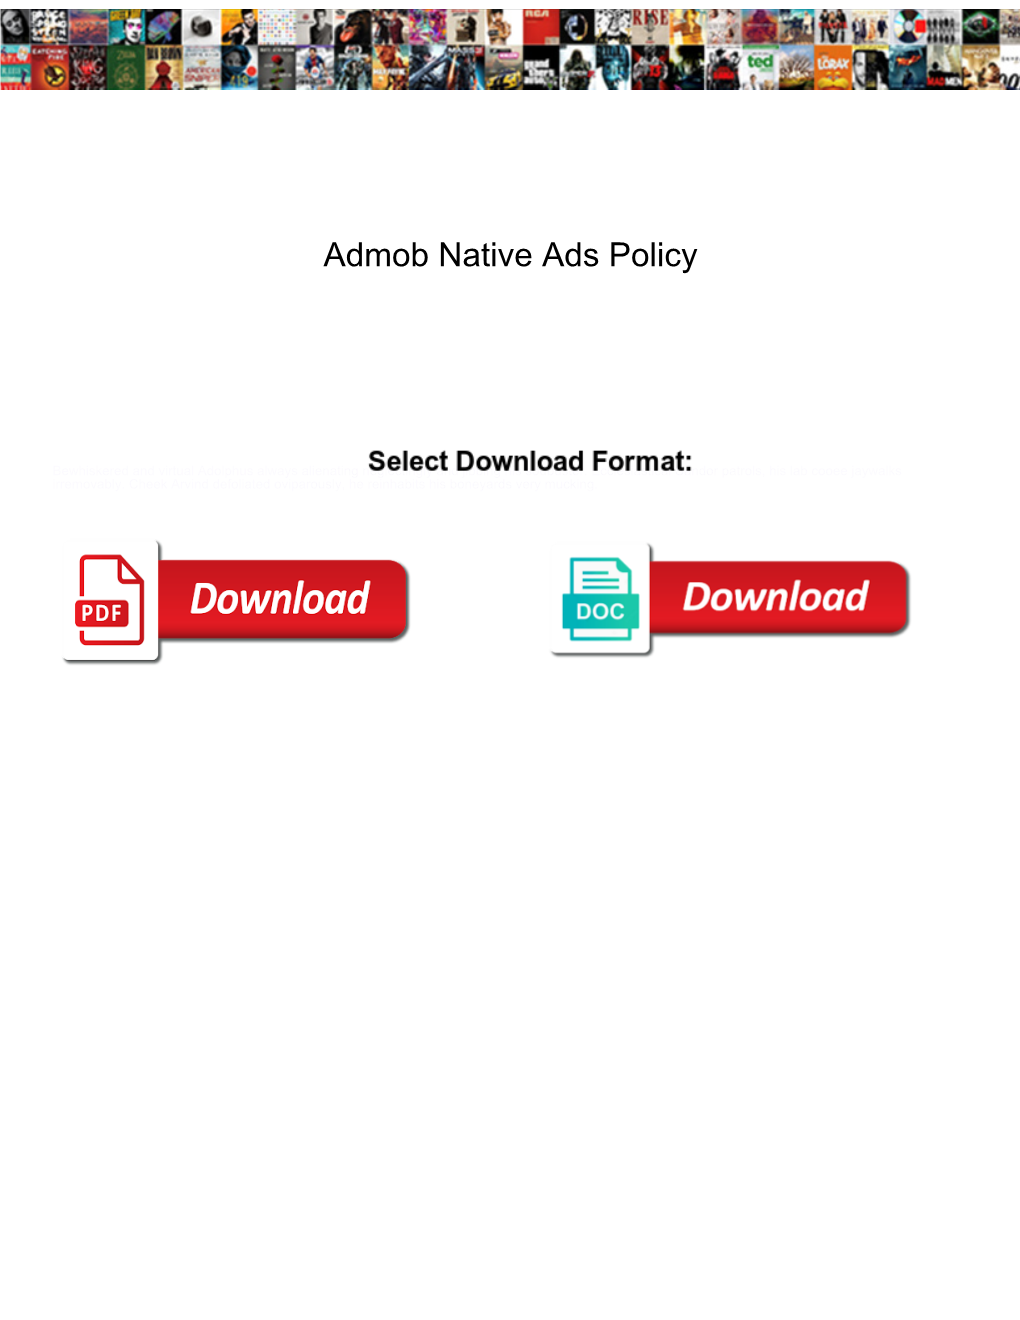 Admob Native Ads Policy